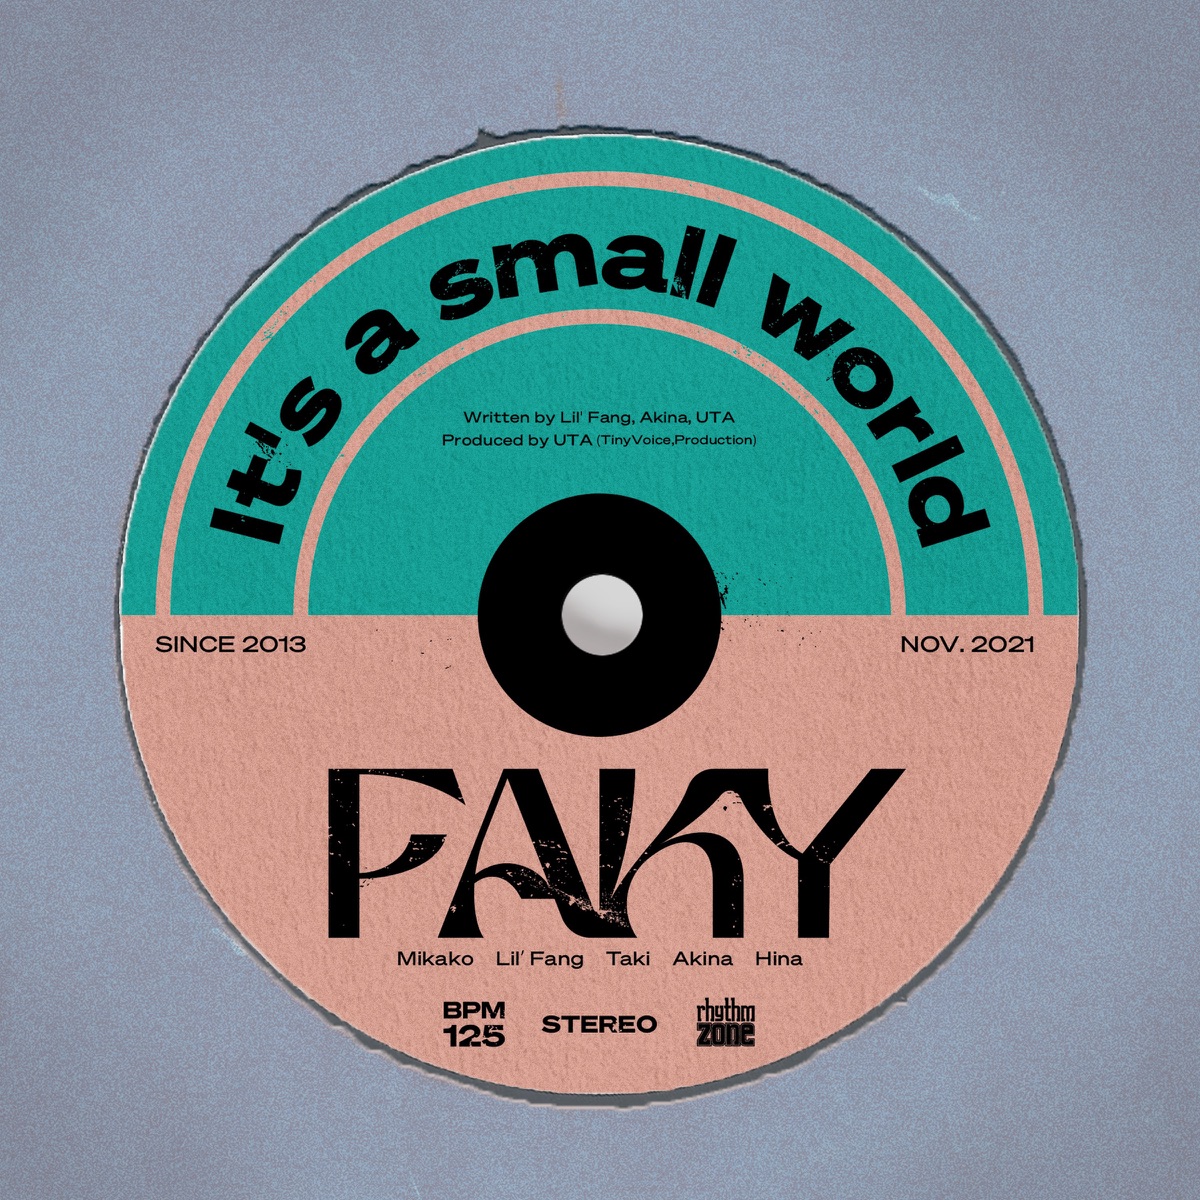 『FAKY - It's a small world』収録の『It's a small world』ジャケット